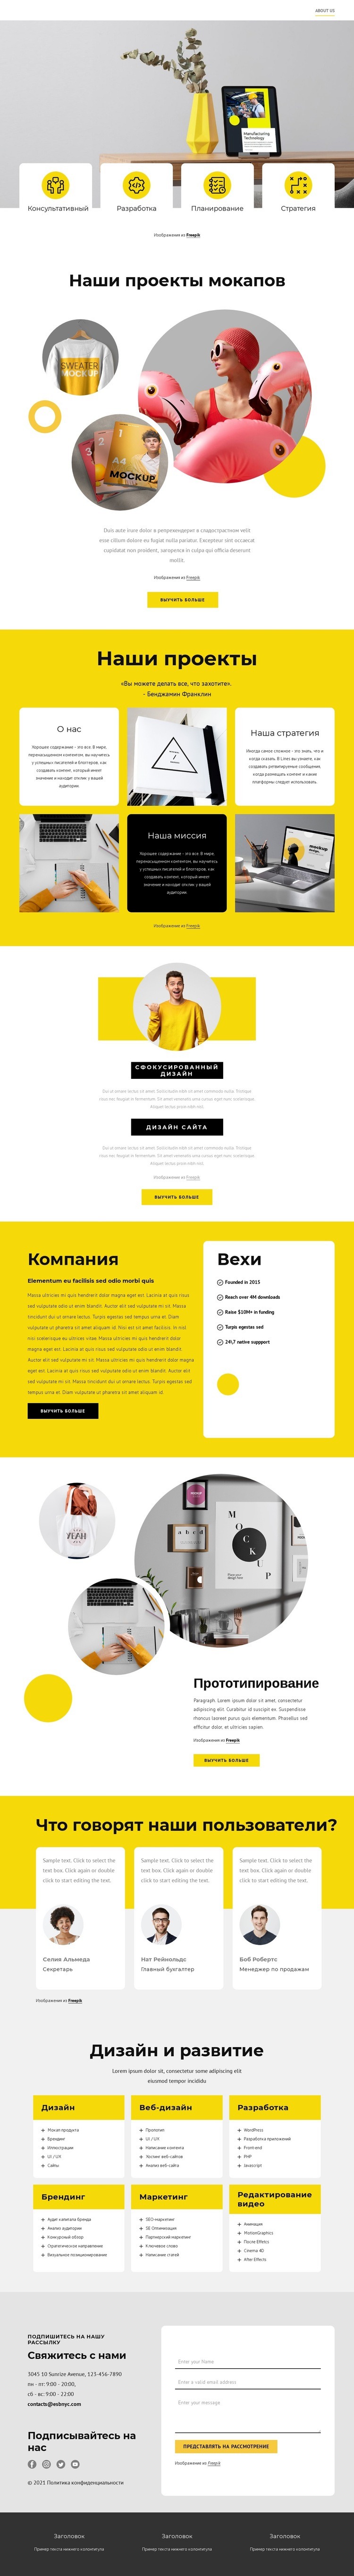 Студия дизайна и брендинга Мокап веб-сайта